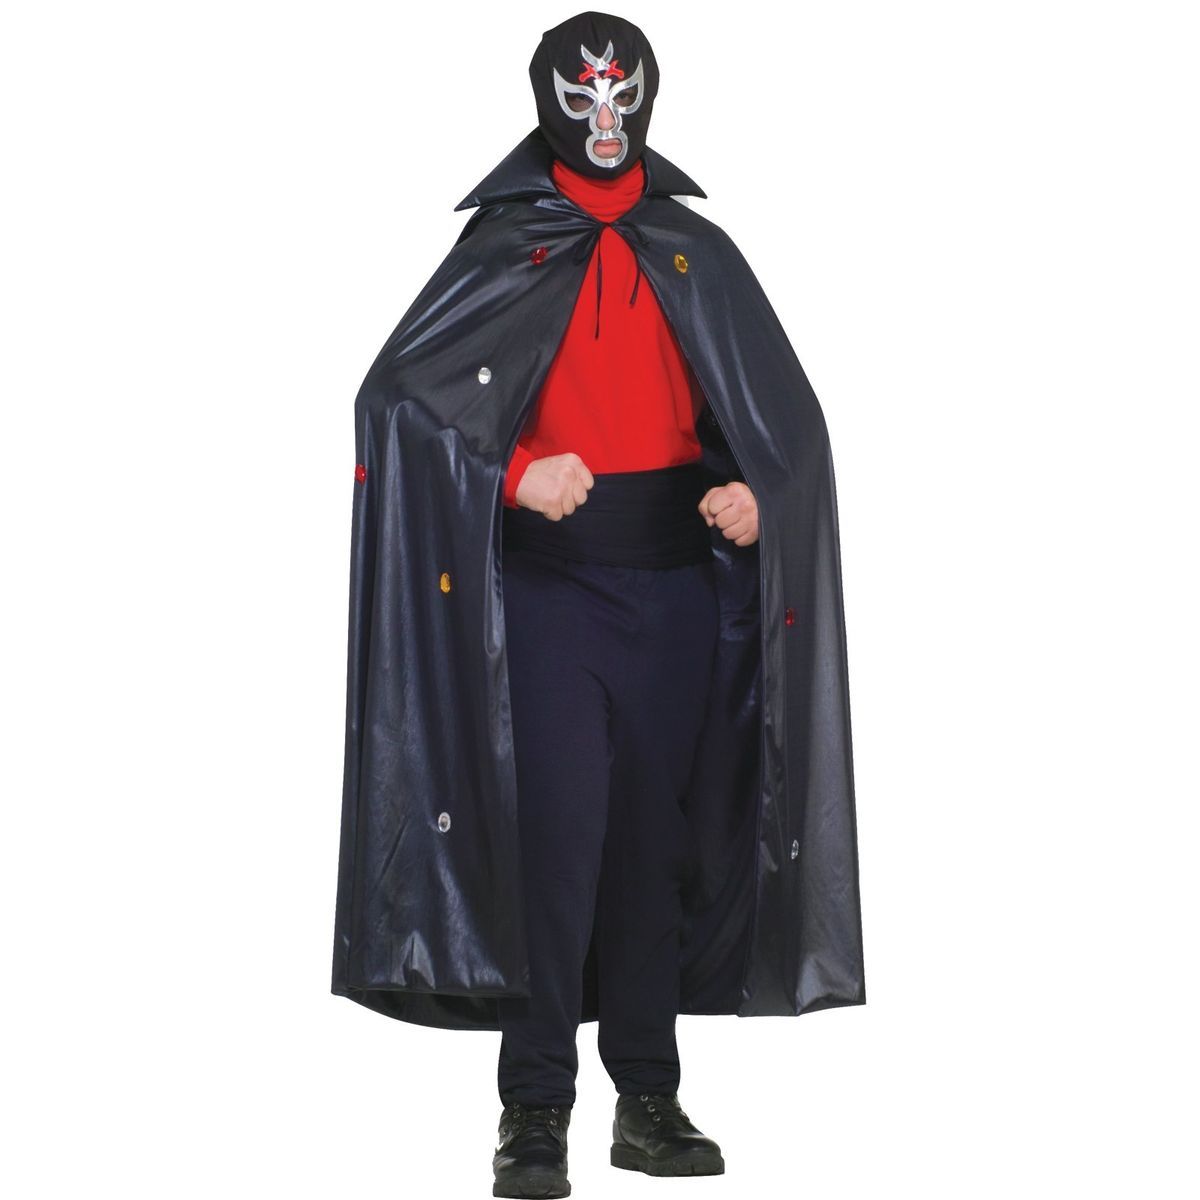  Black Luchador Lucha Libre Dress Up Halloween Adult Costume